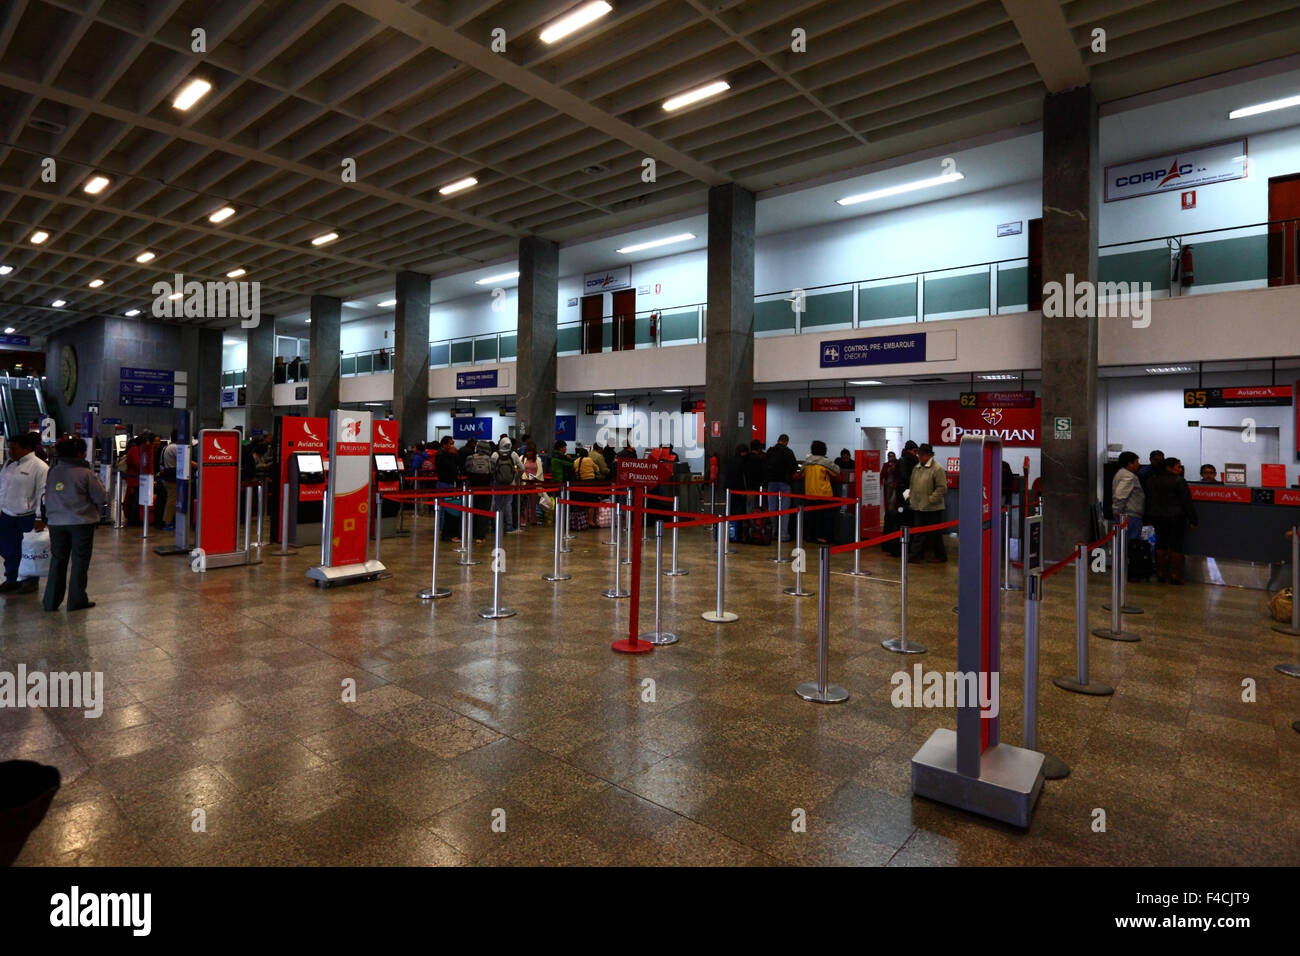 Passengers queuing at check in desks inside Alejandro Velasco Astete International Airport CUZ terminal building, Cusco Peru Stock Photo